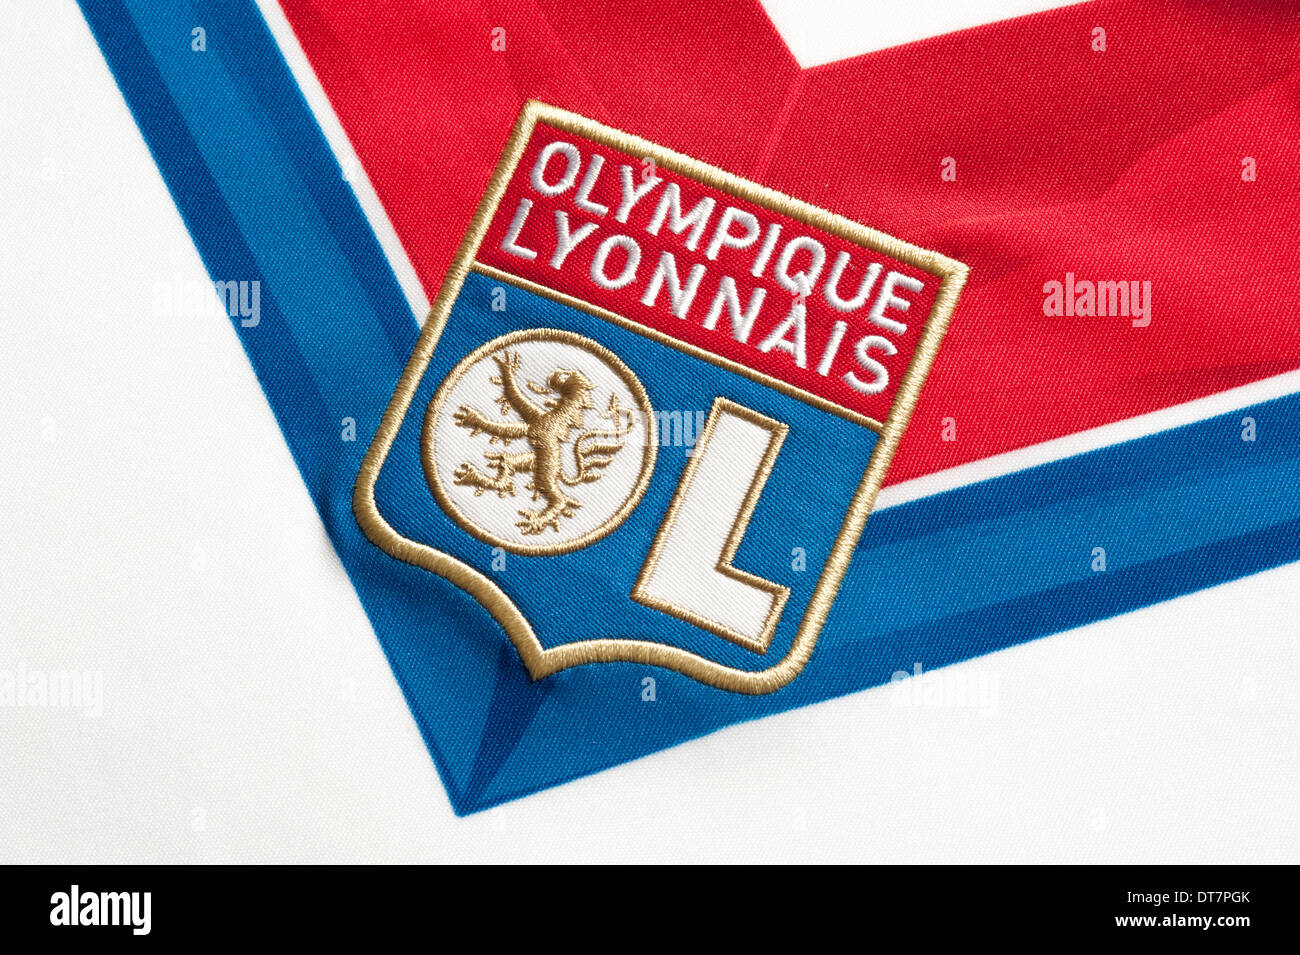 Close up of Olympique Lyonnais football team kit Stock Photo